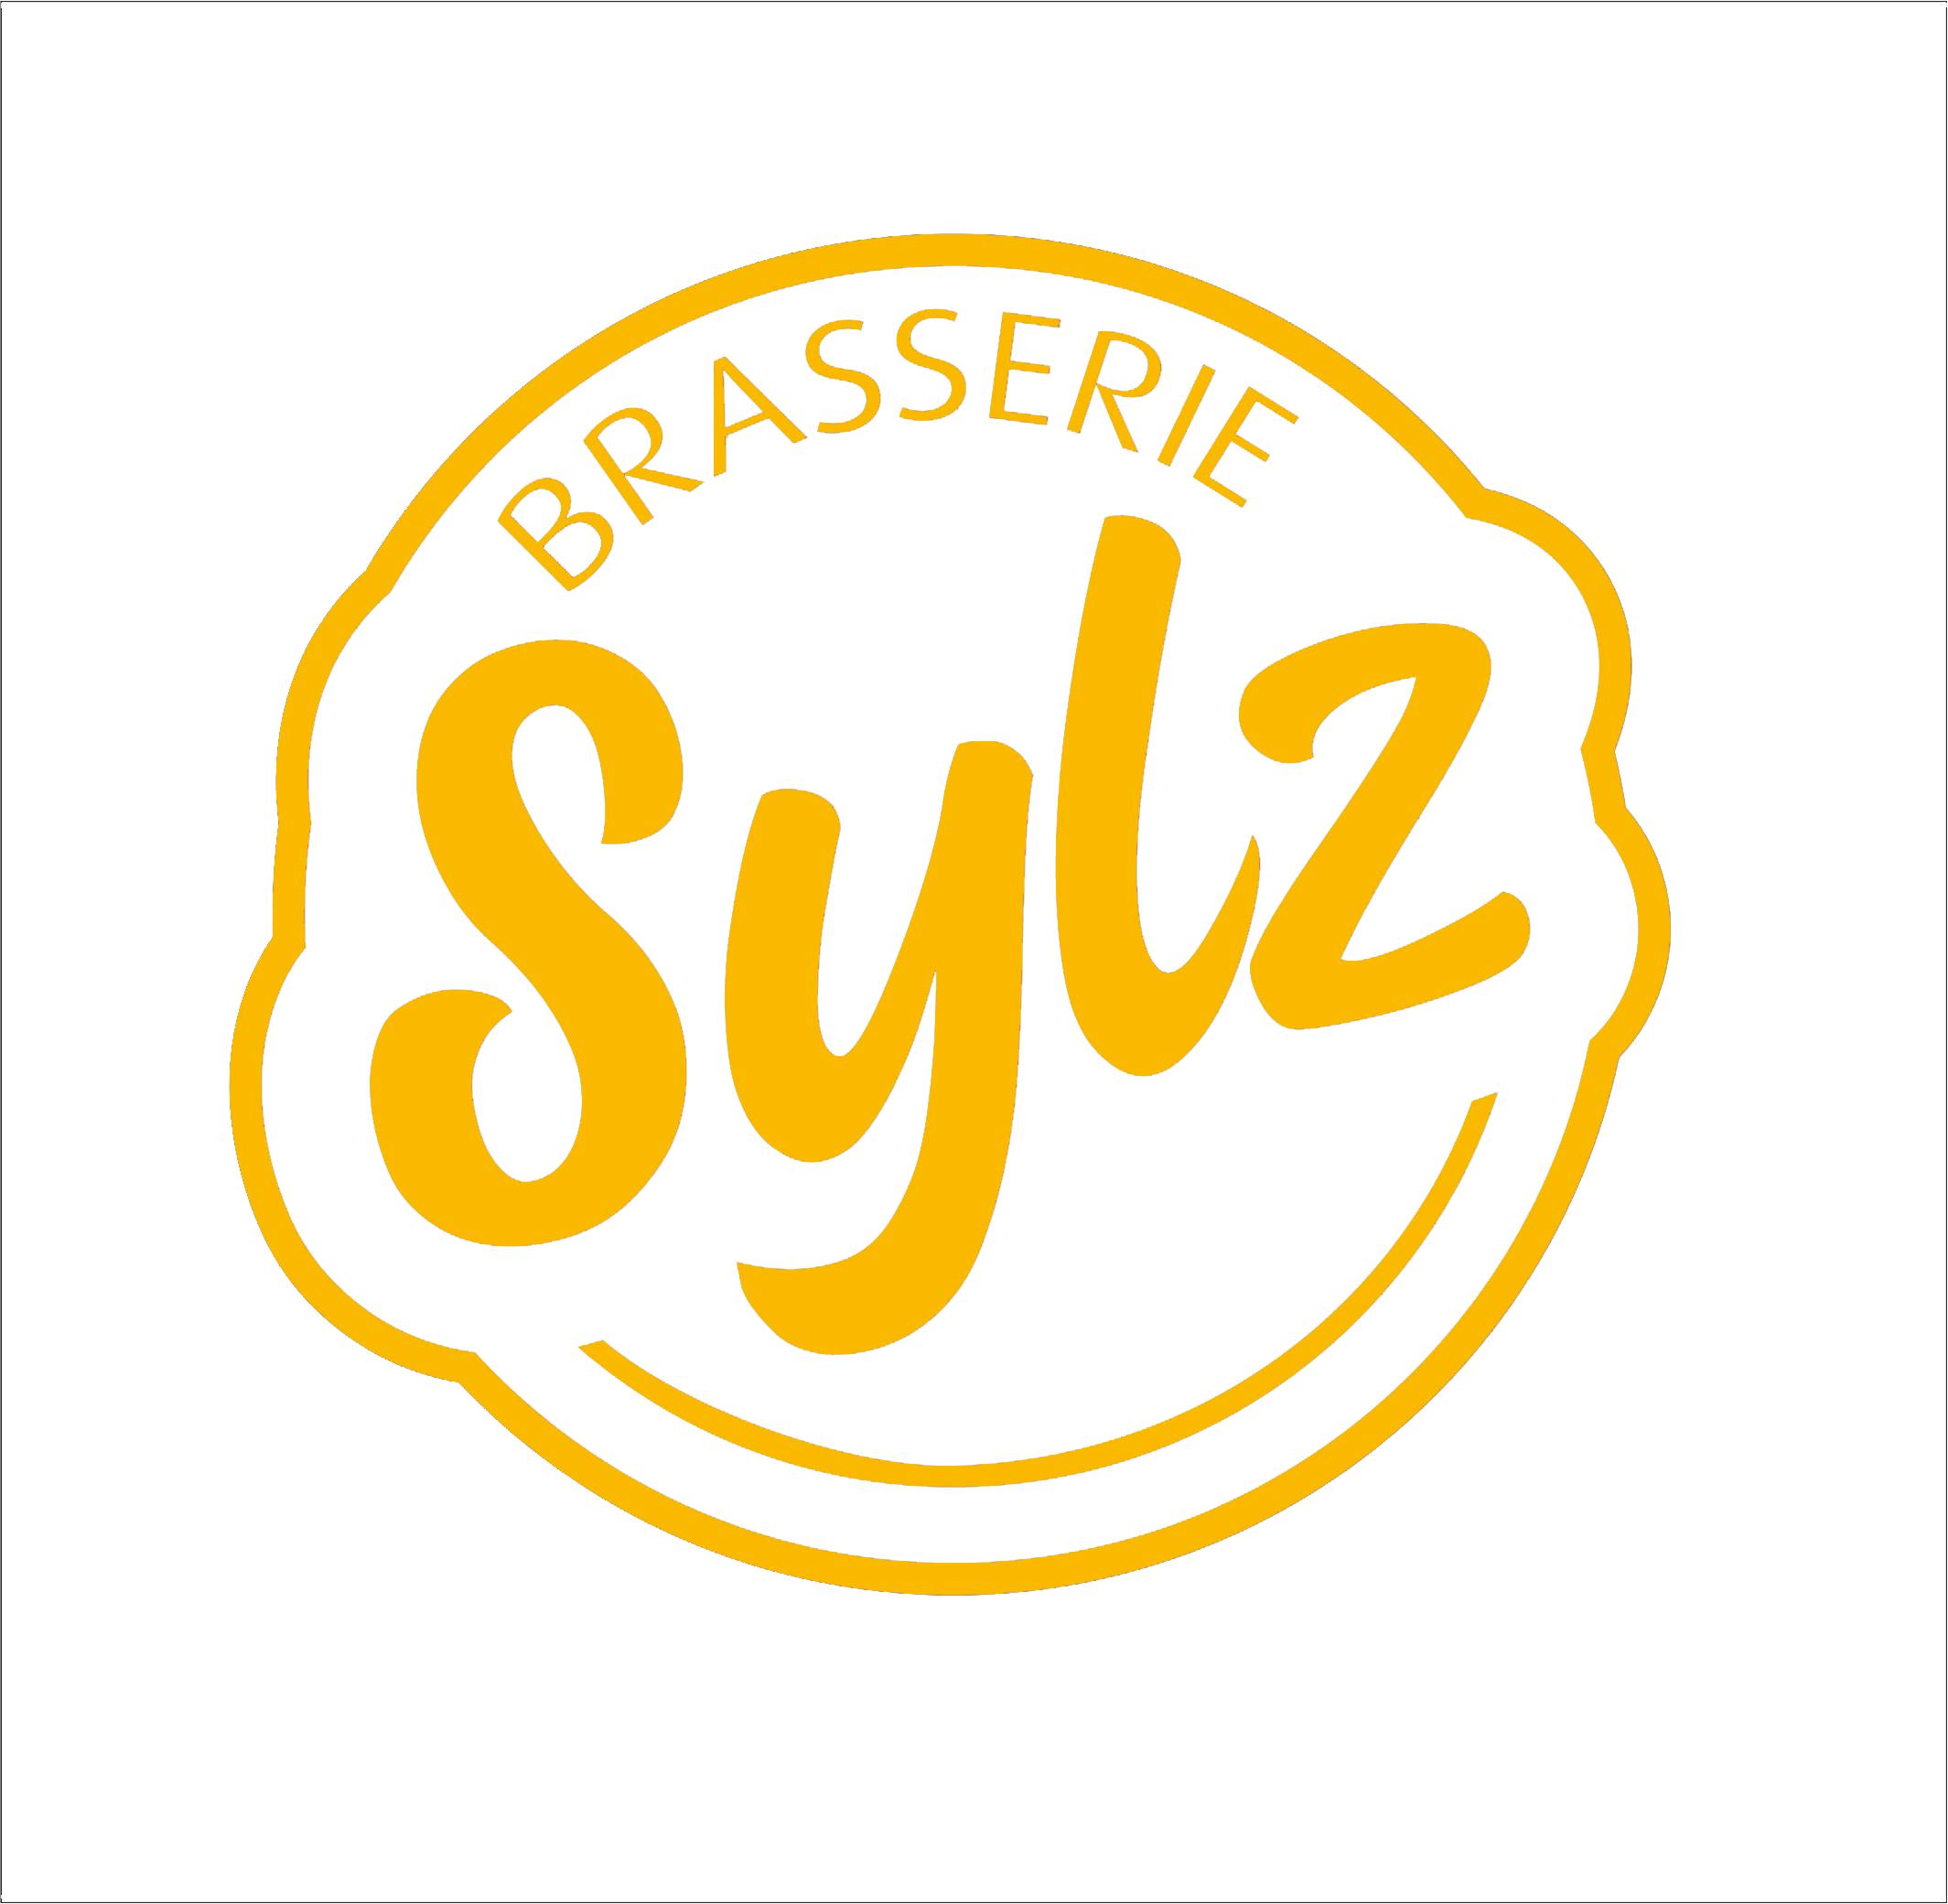 Brasserie Sylz